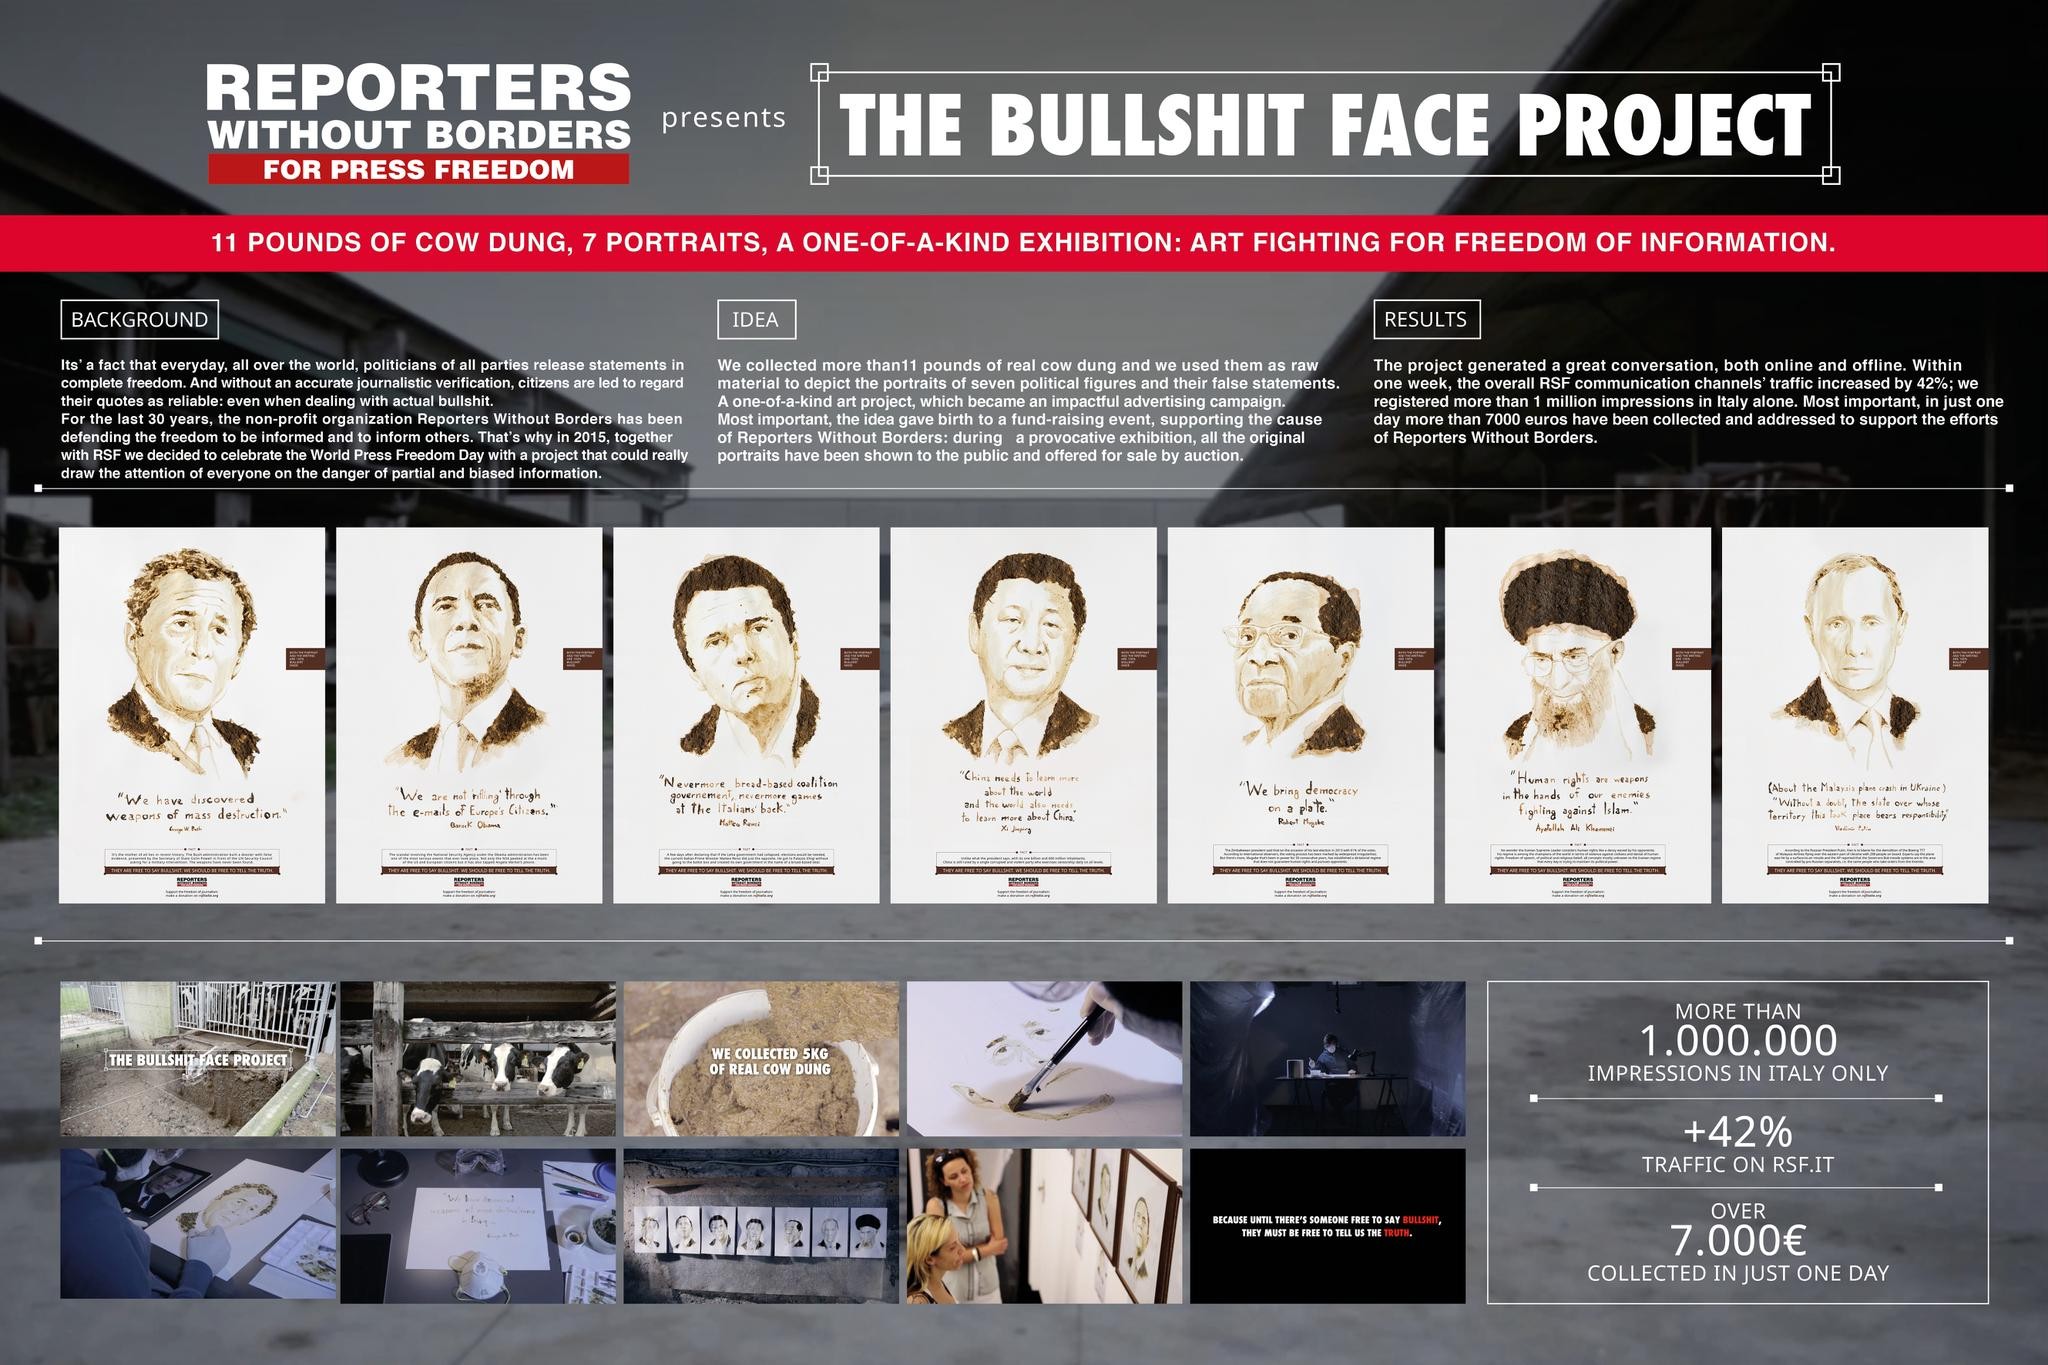 The Bullshit Face Project